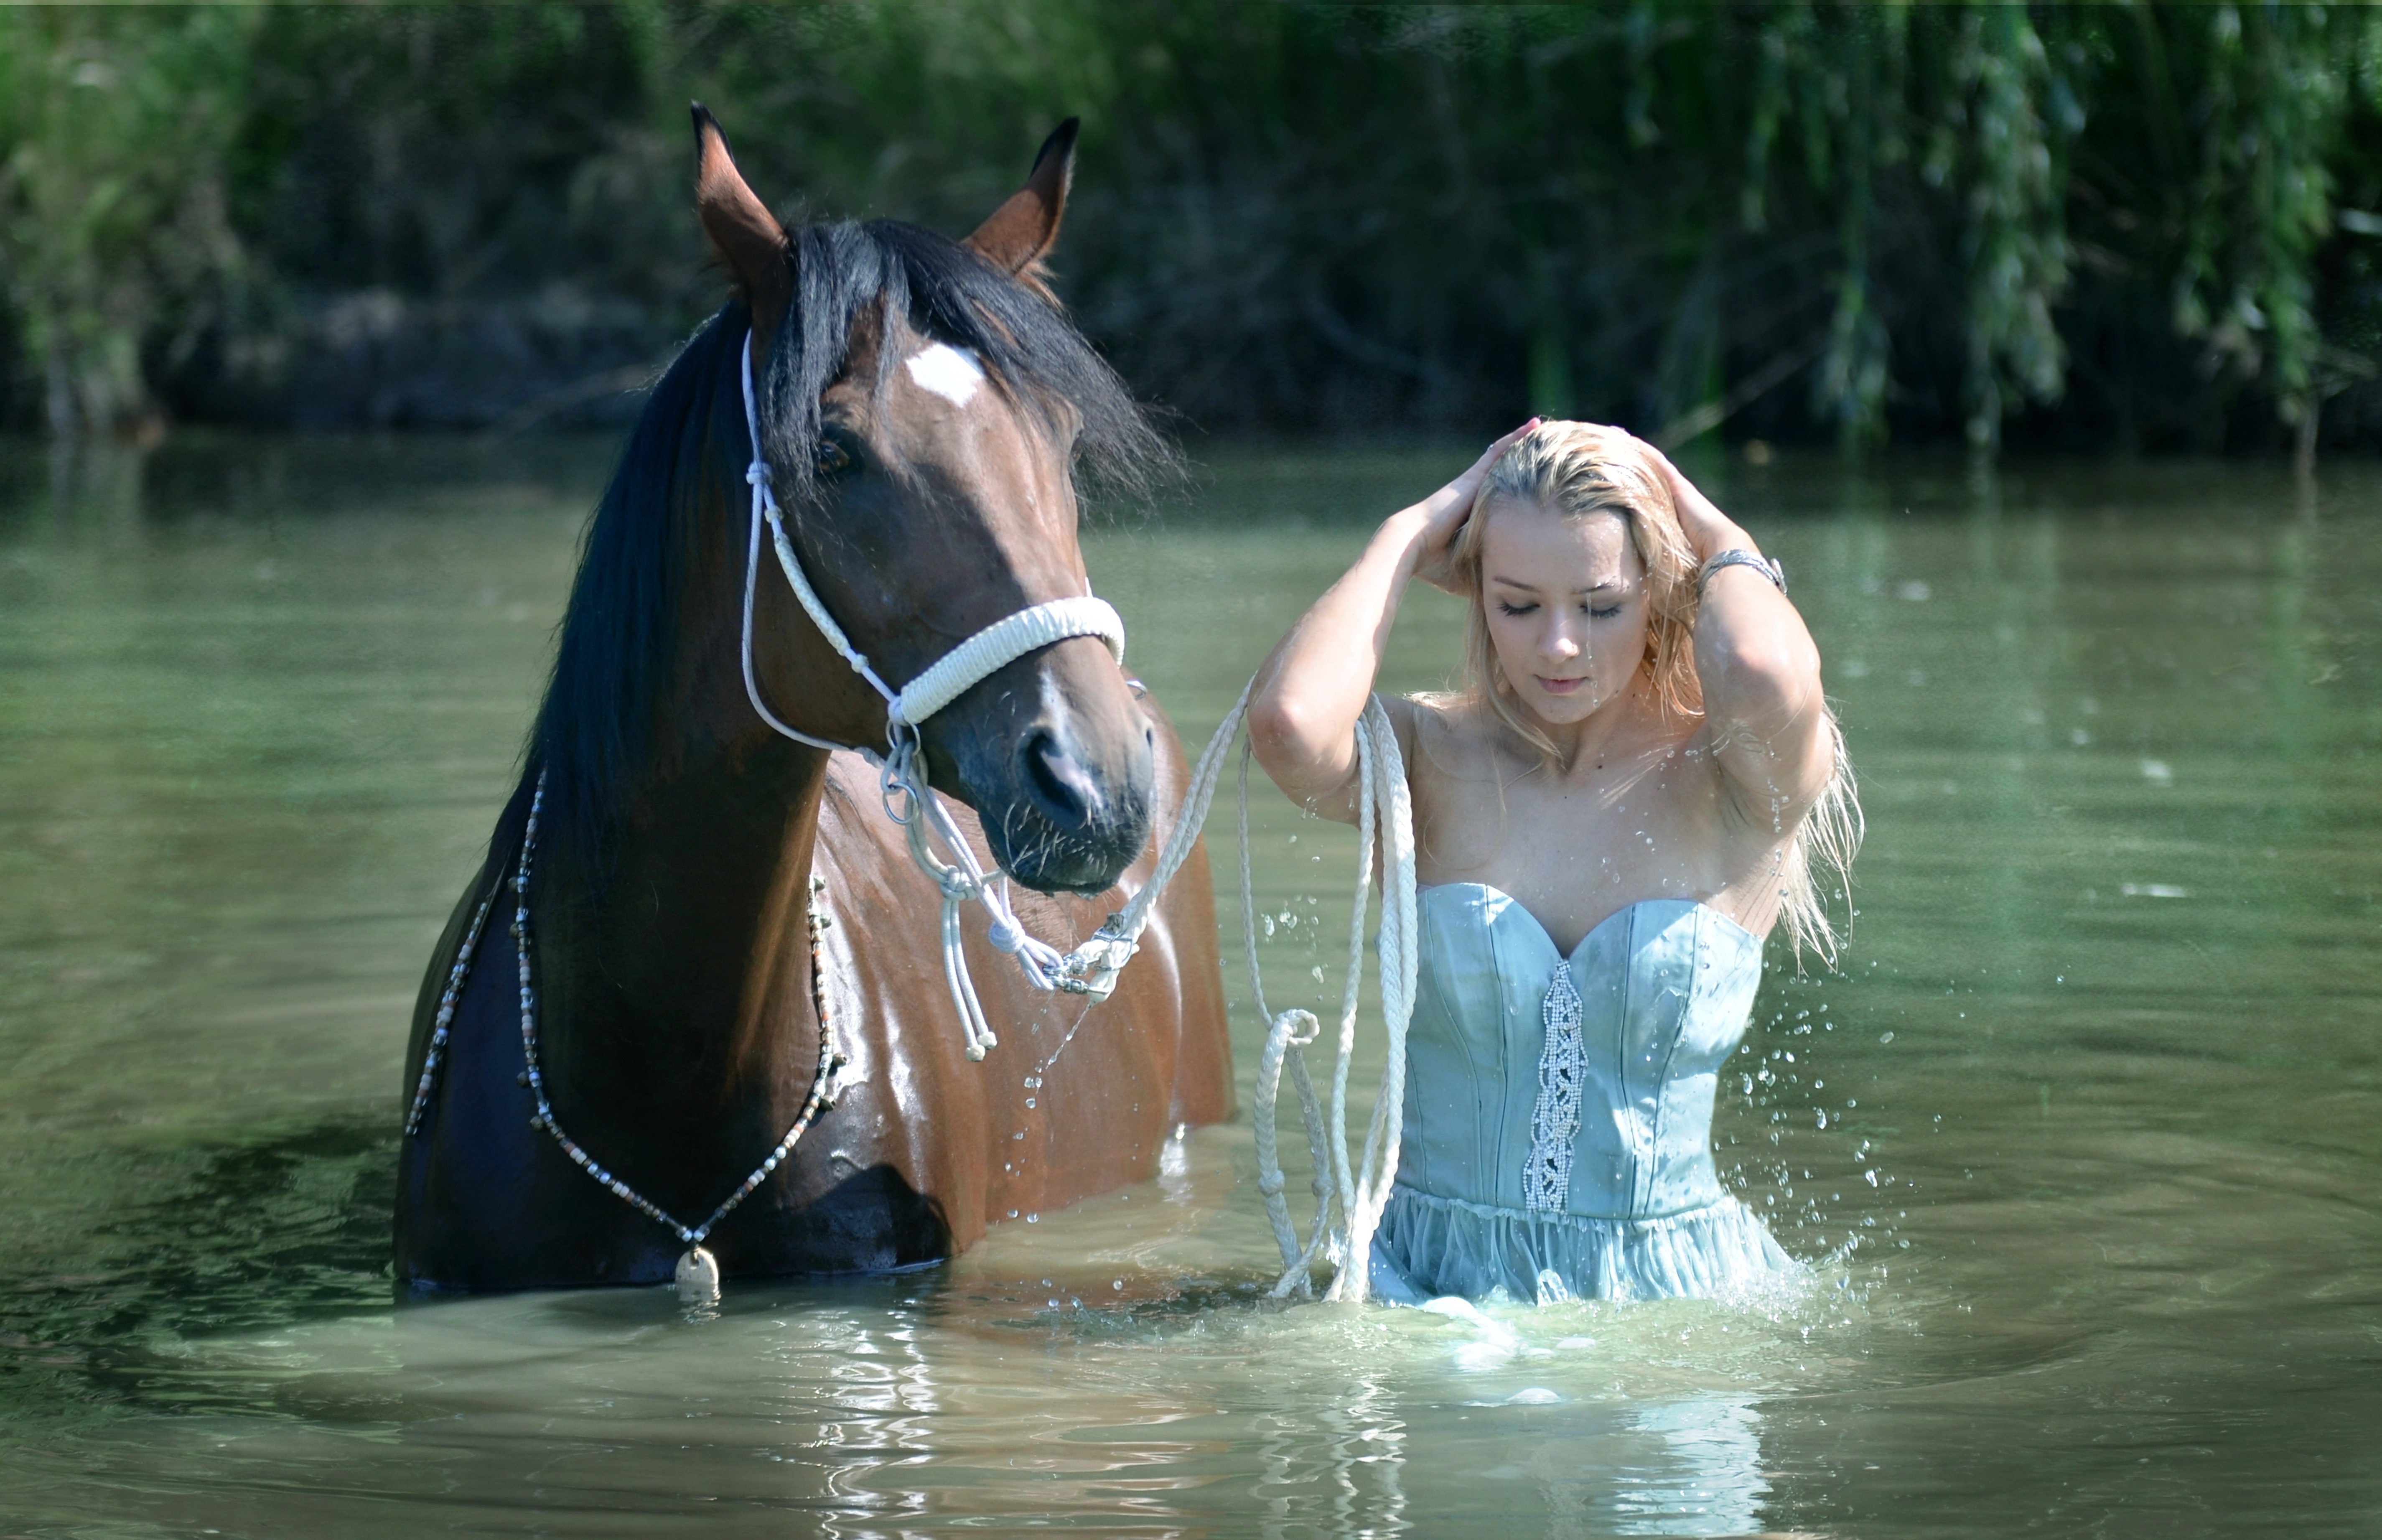 Девки и лошади. Лошади в воде. Девушка с лошадью. Фотосессия с лошадью в воде. Девушка на коне.